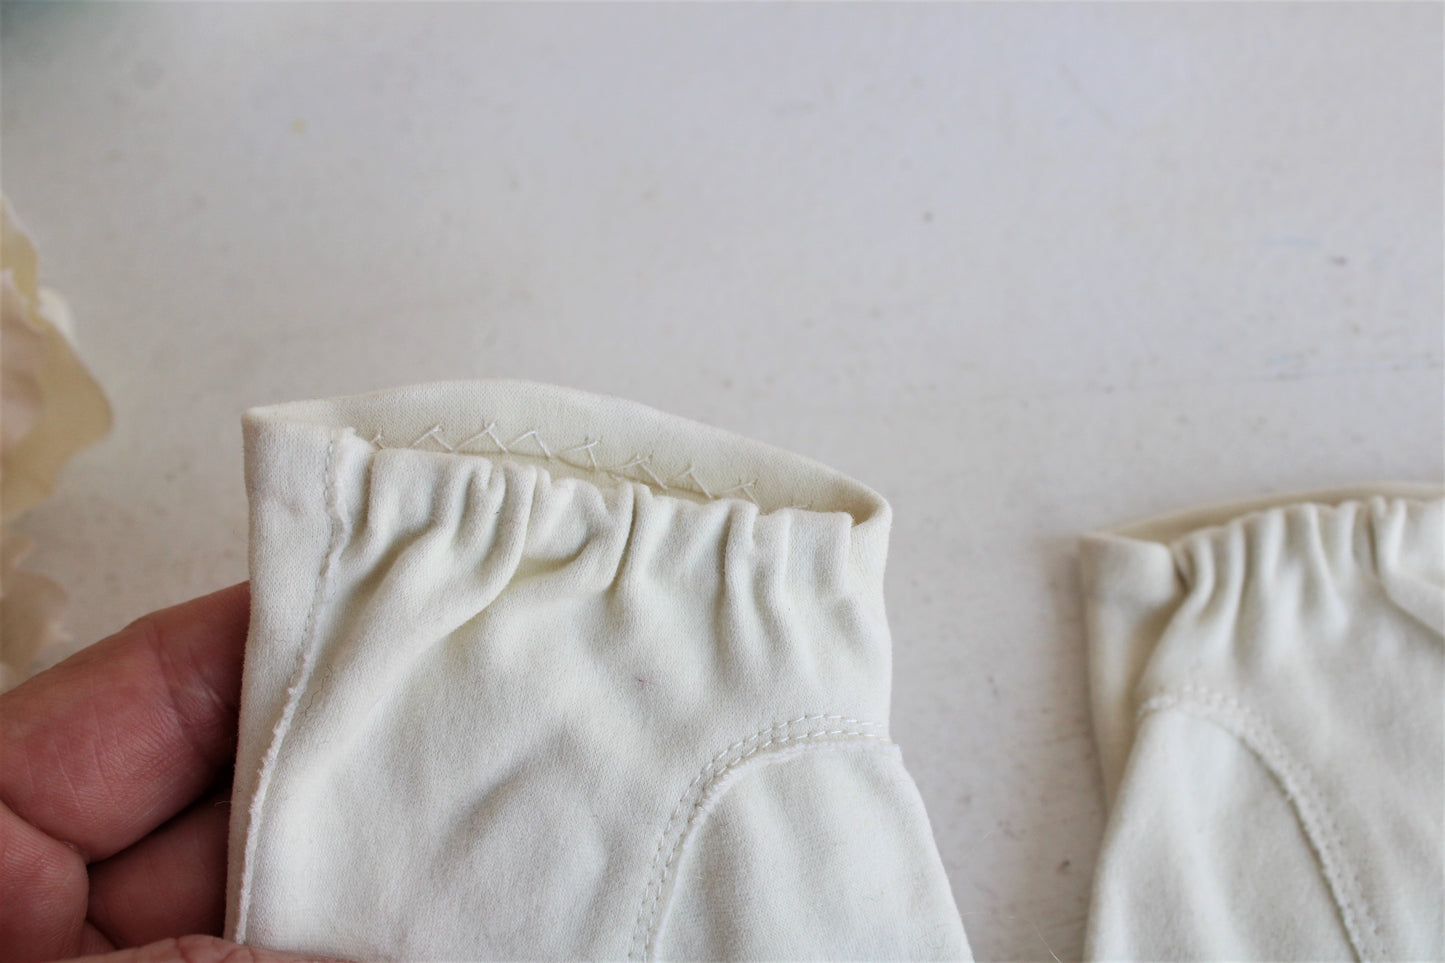 Vintage 1960s Ivory Cotton Gloves, Size 6.5